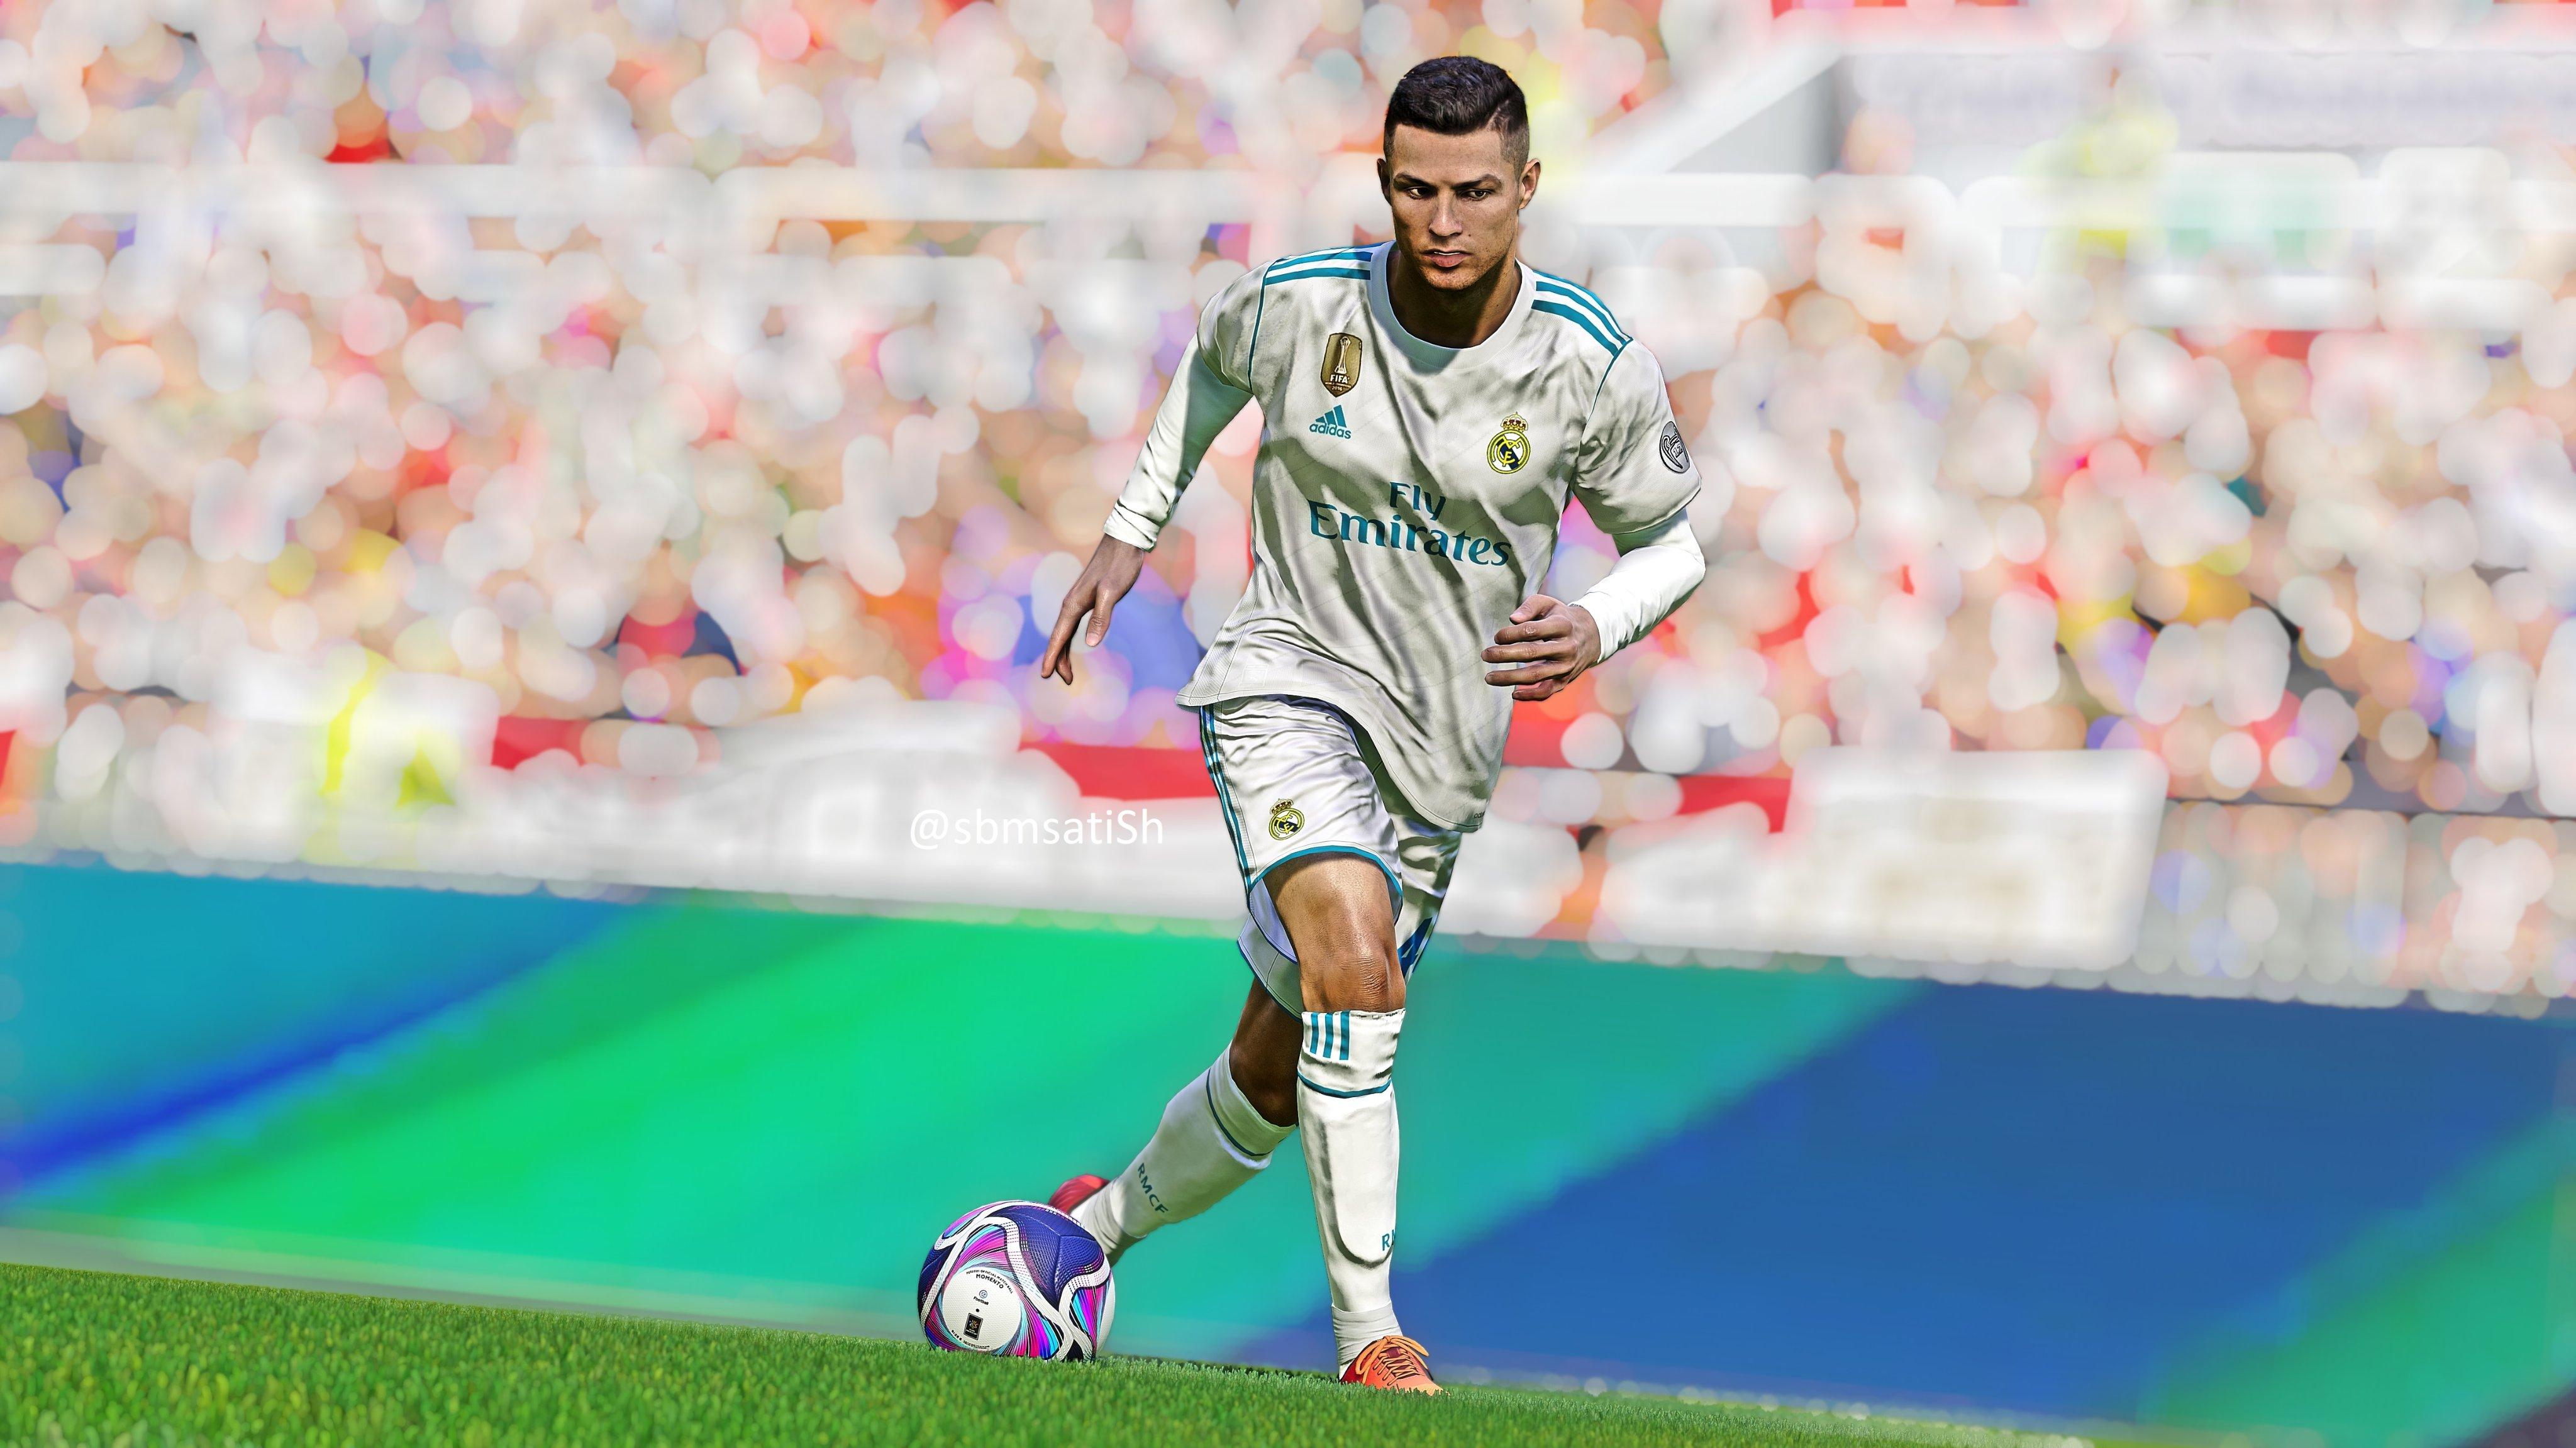 Proevosoccerist On Cristiano Ronaldo 4k Wallpaper